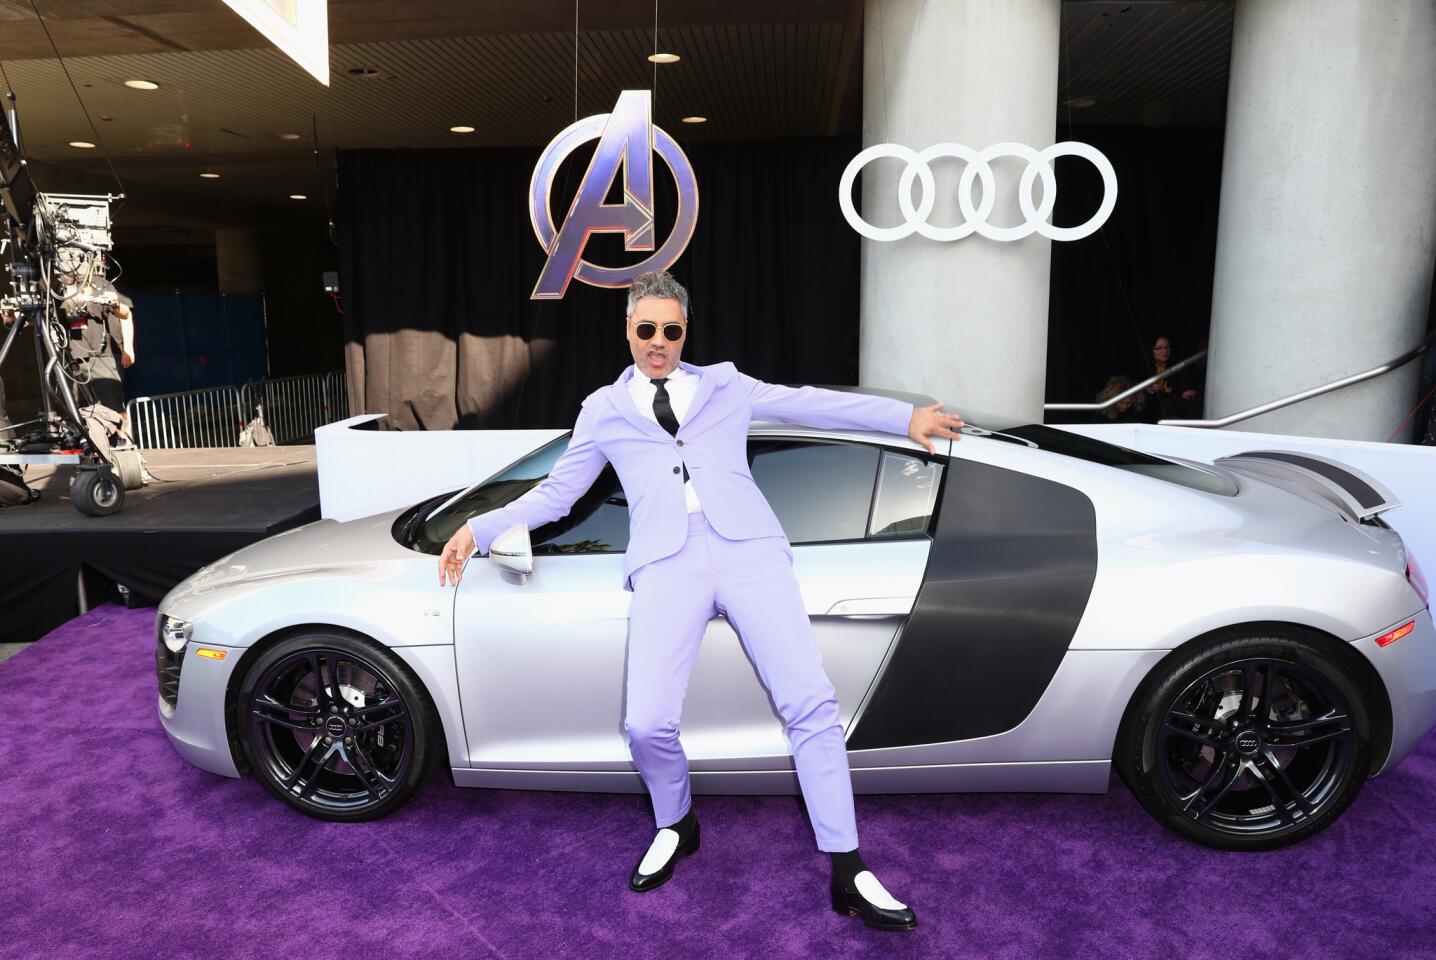 BESTPIX - Audi Arrives At The World Premiere Of "Avengers: Endgame"